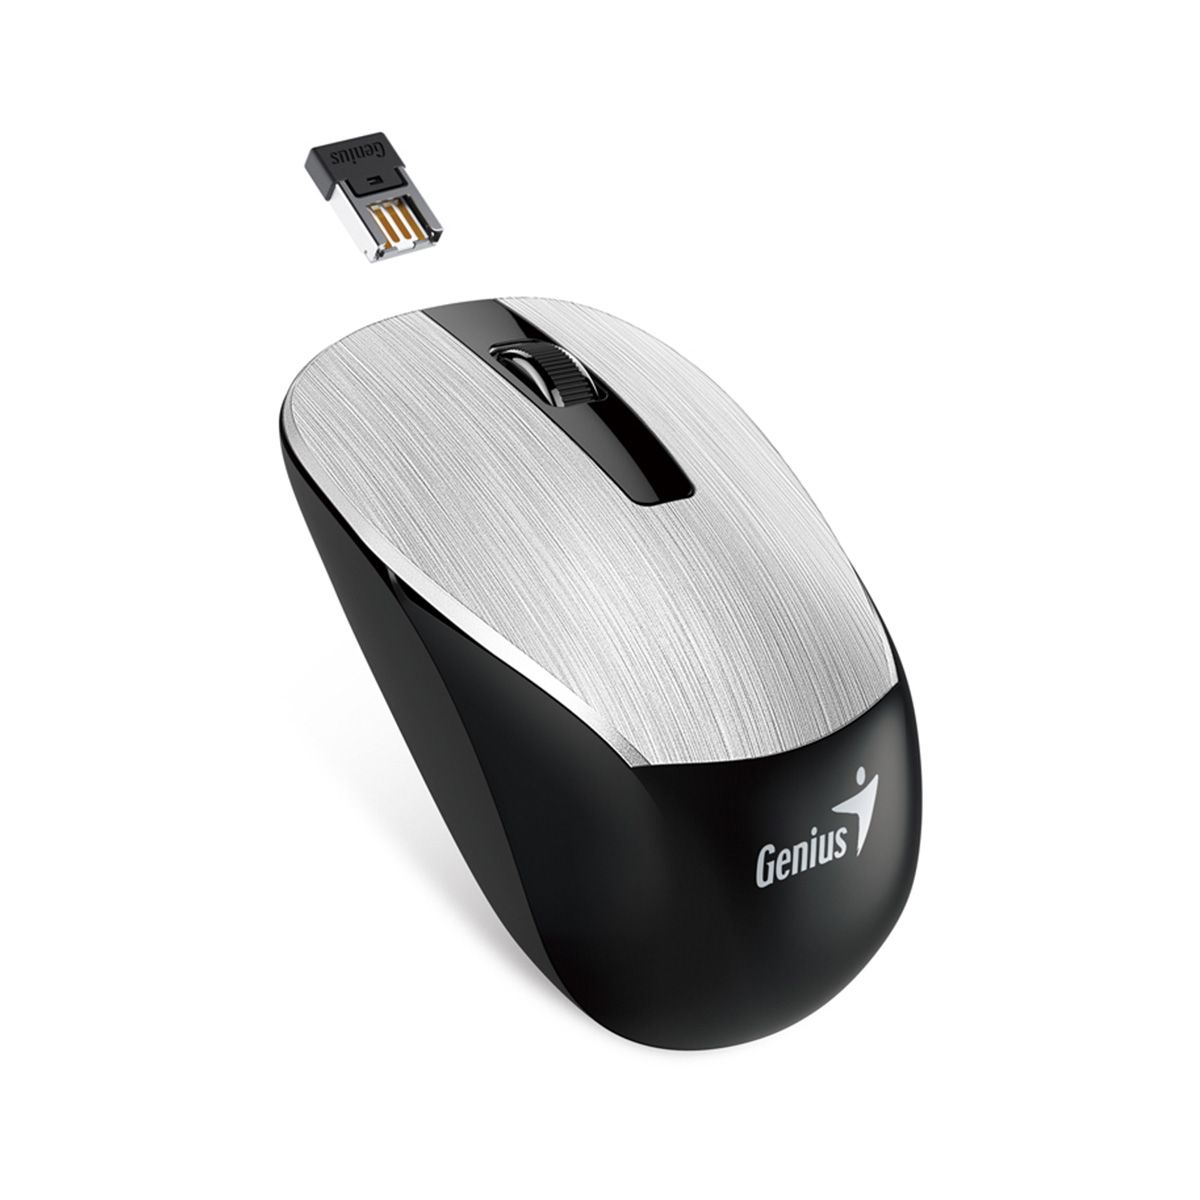 Genius Mouse Wireless เมาส์ไร้สาย NX-7015 (USB) Silver